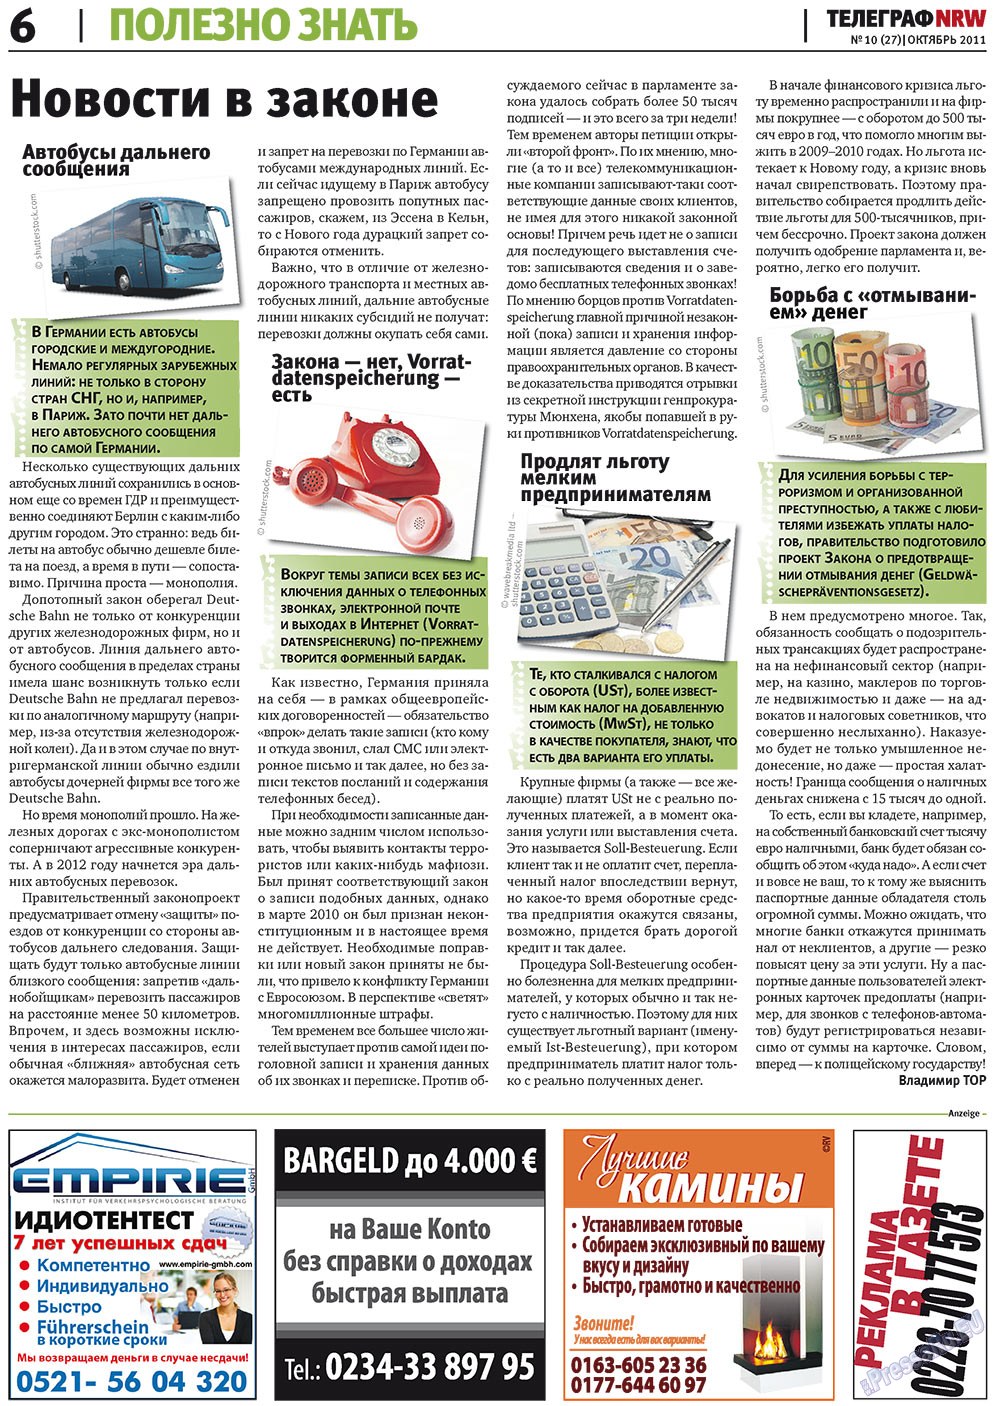 Телеграф NRW, газета. 2011 №10 стр.6